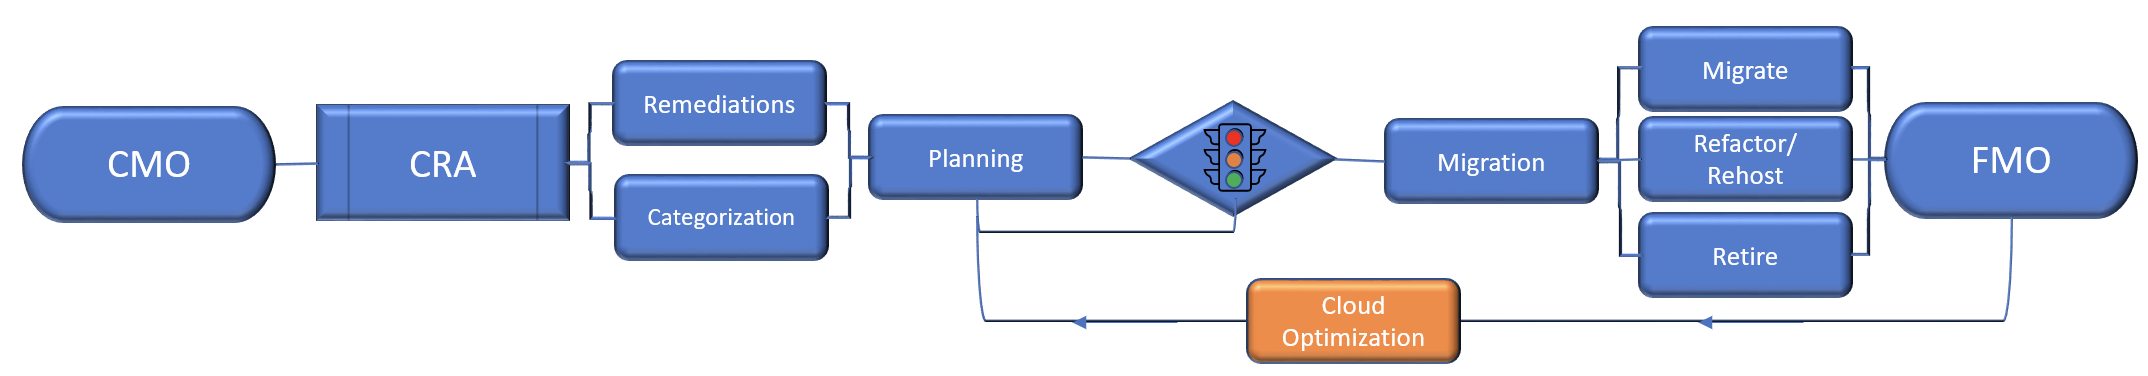 Cloud Optimization Blue Scheme